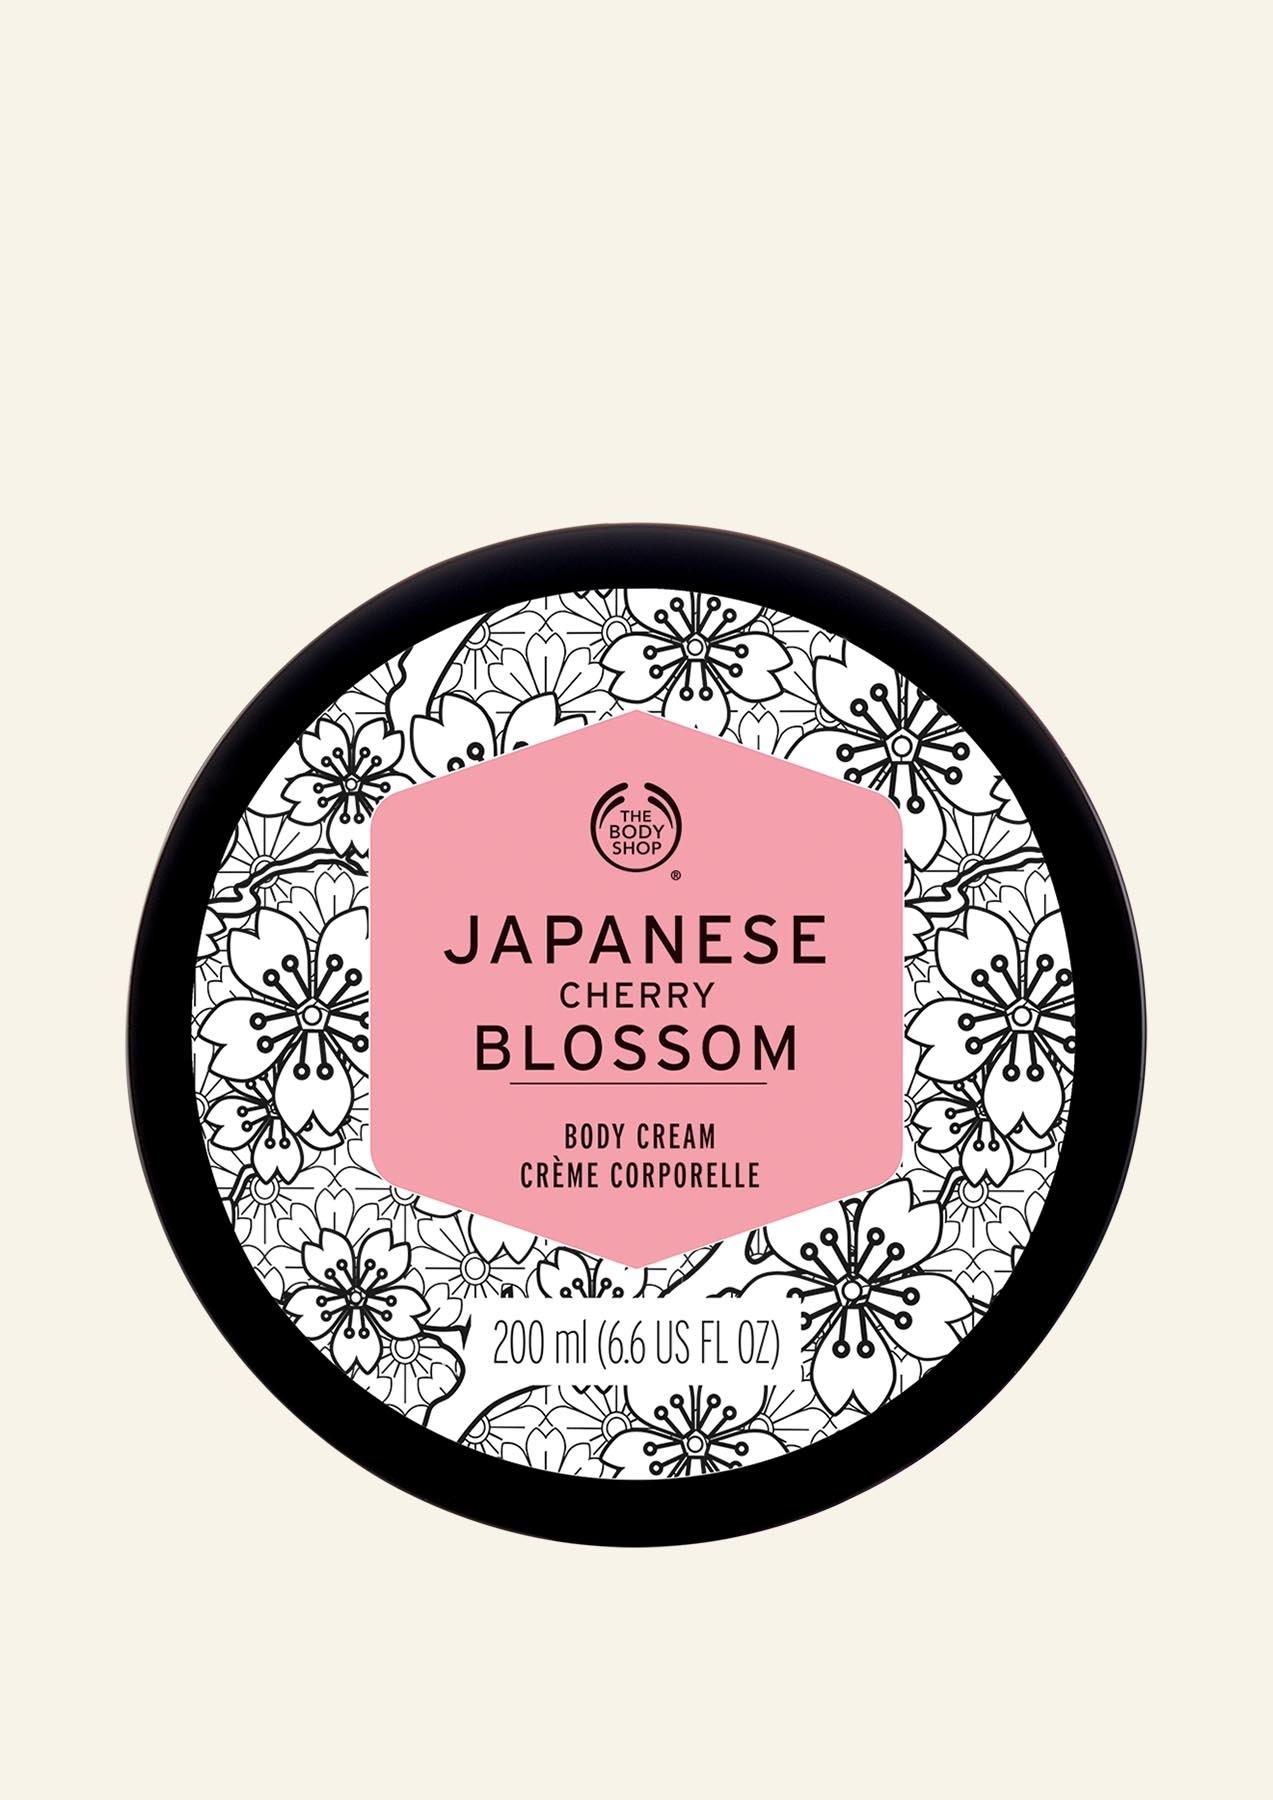 Japanese Cherry Blossom Body Cream The Body Shop 